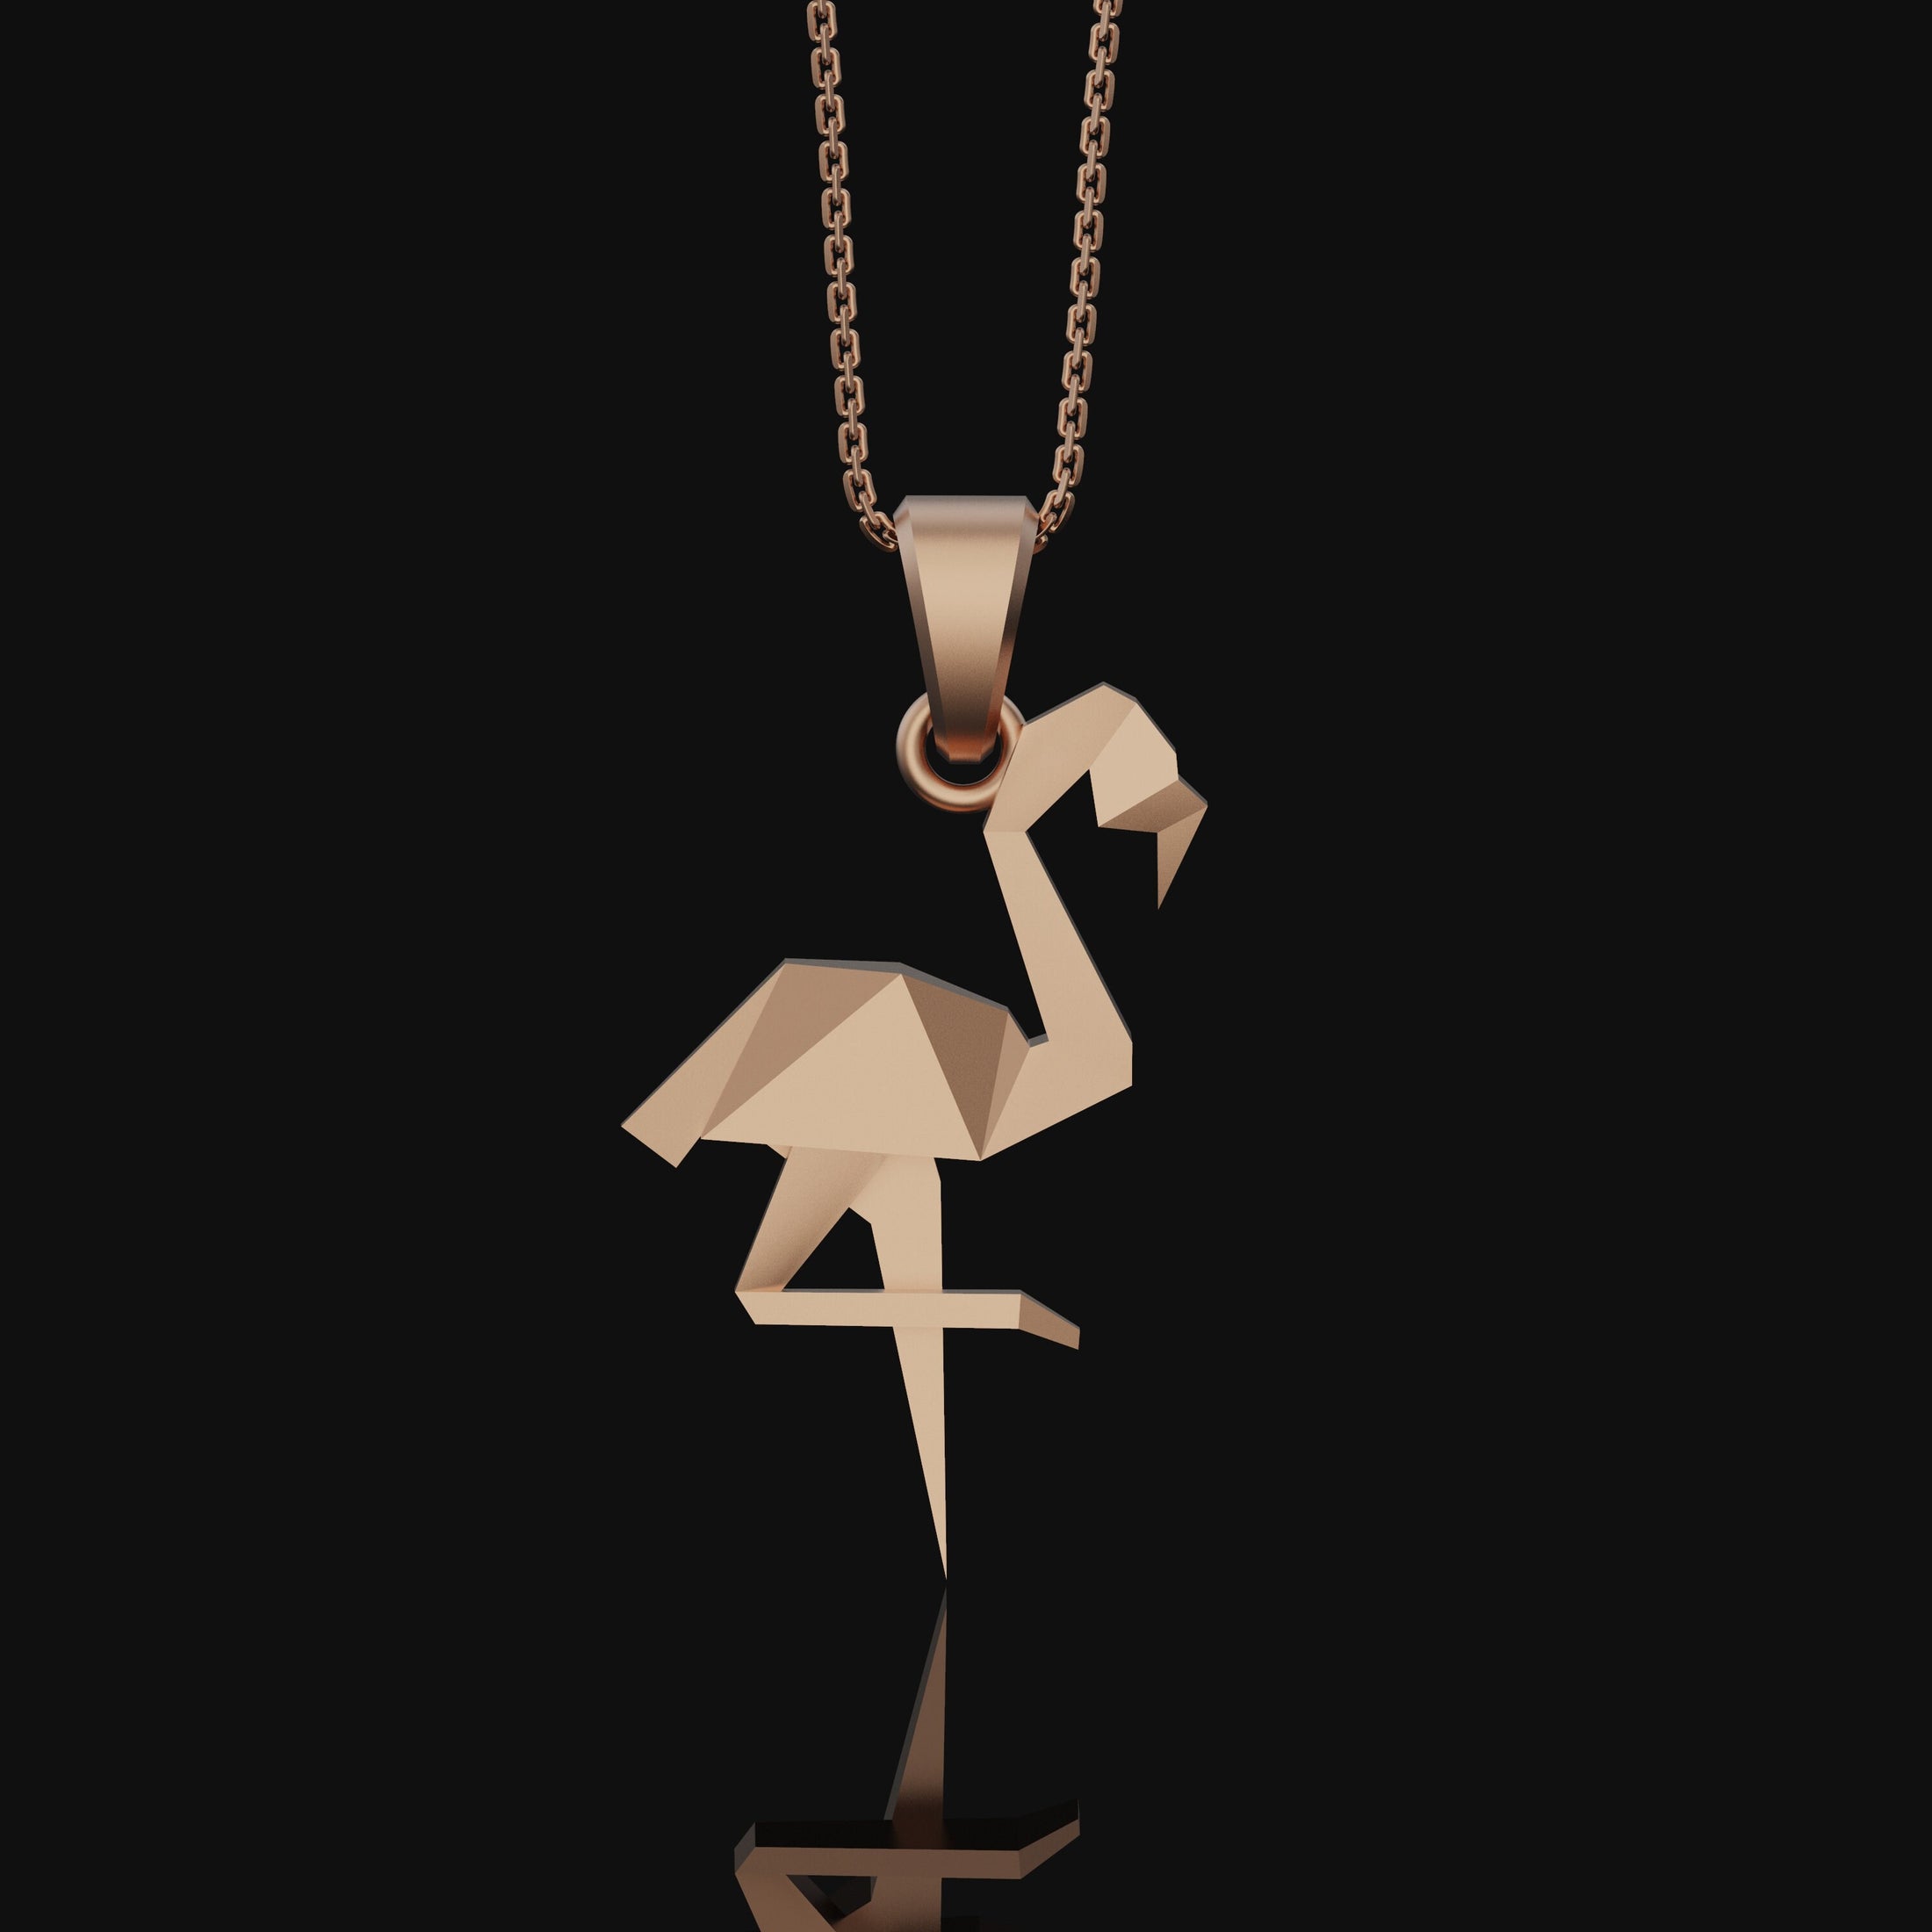 Silver Origami Flamingo Necklace Gift for her, Geometric Necklace, Bird Charm, Flamingo Pendant, Christmas Gift, Origami Animal Rose Gold Finish